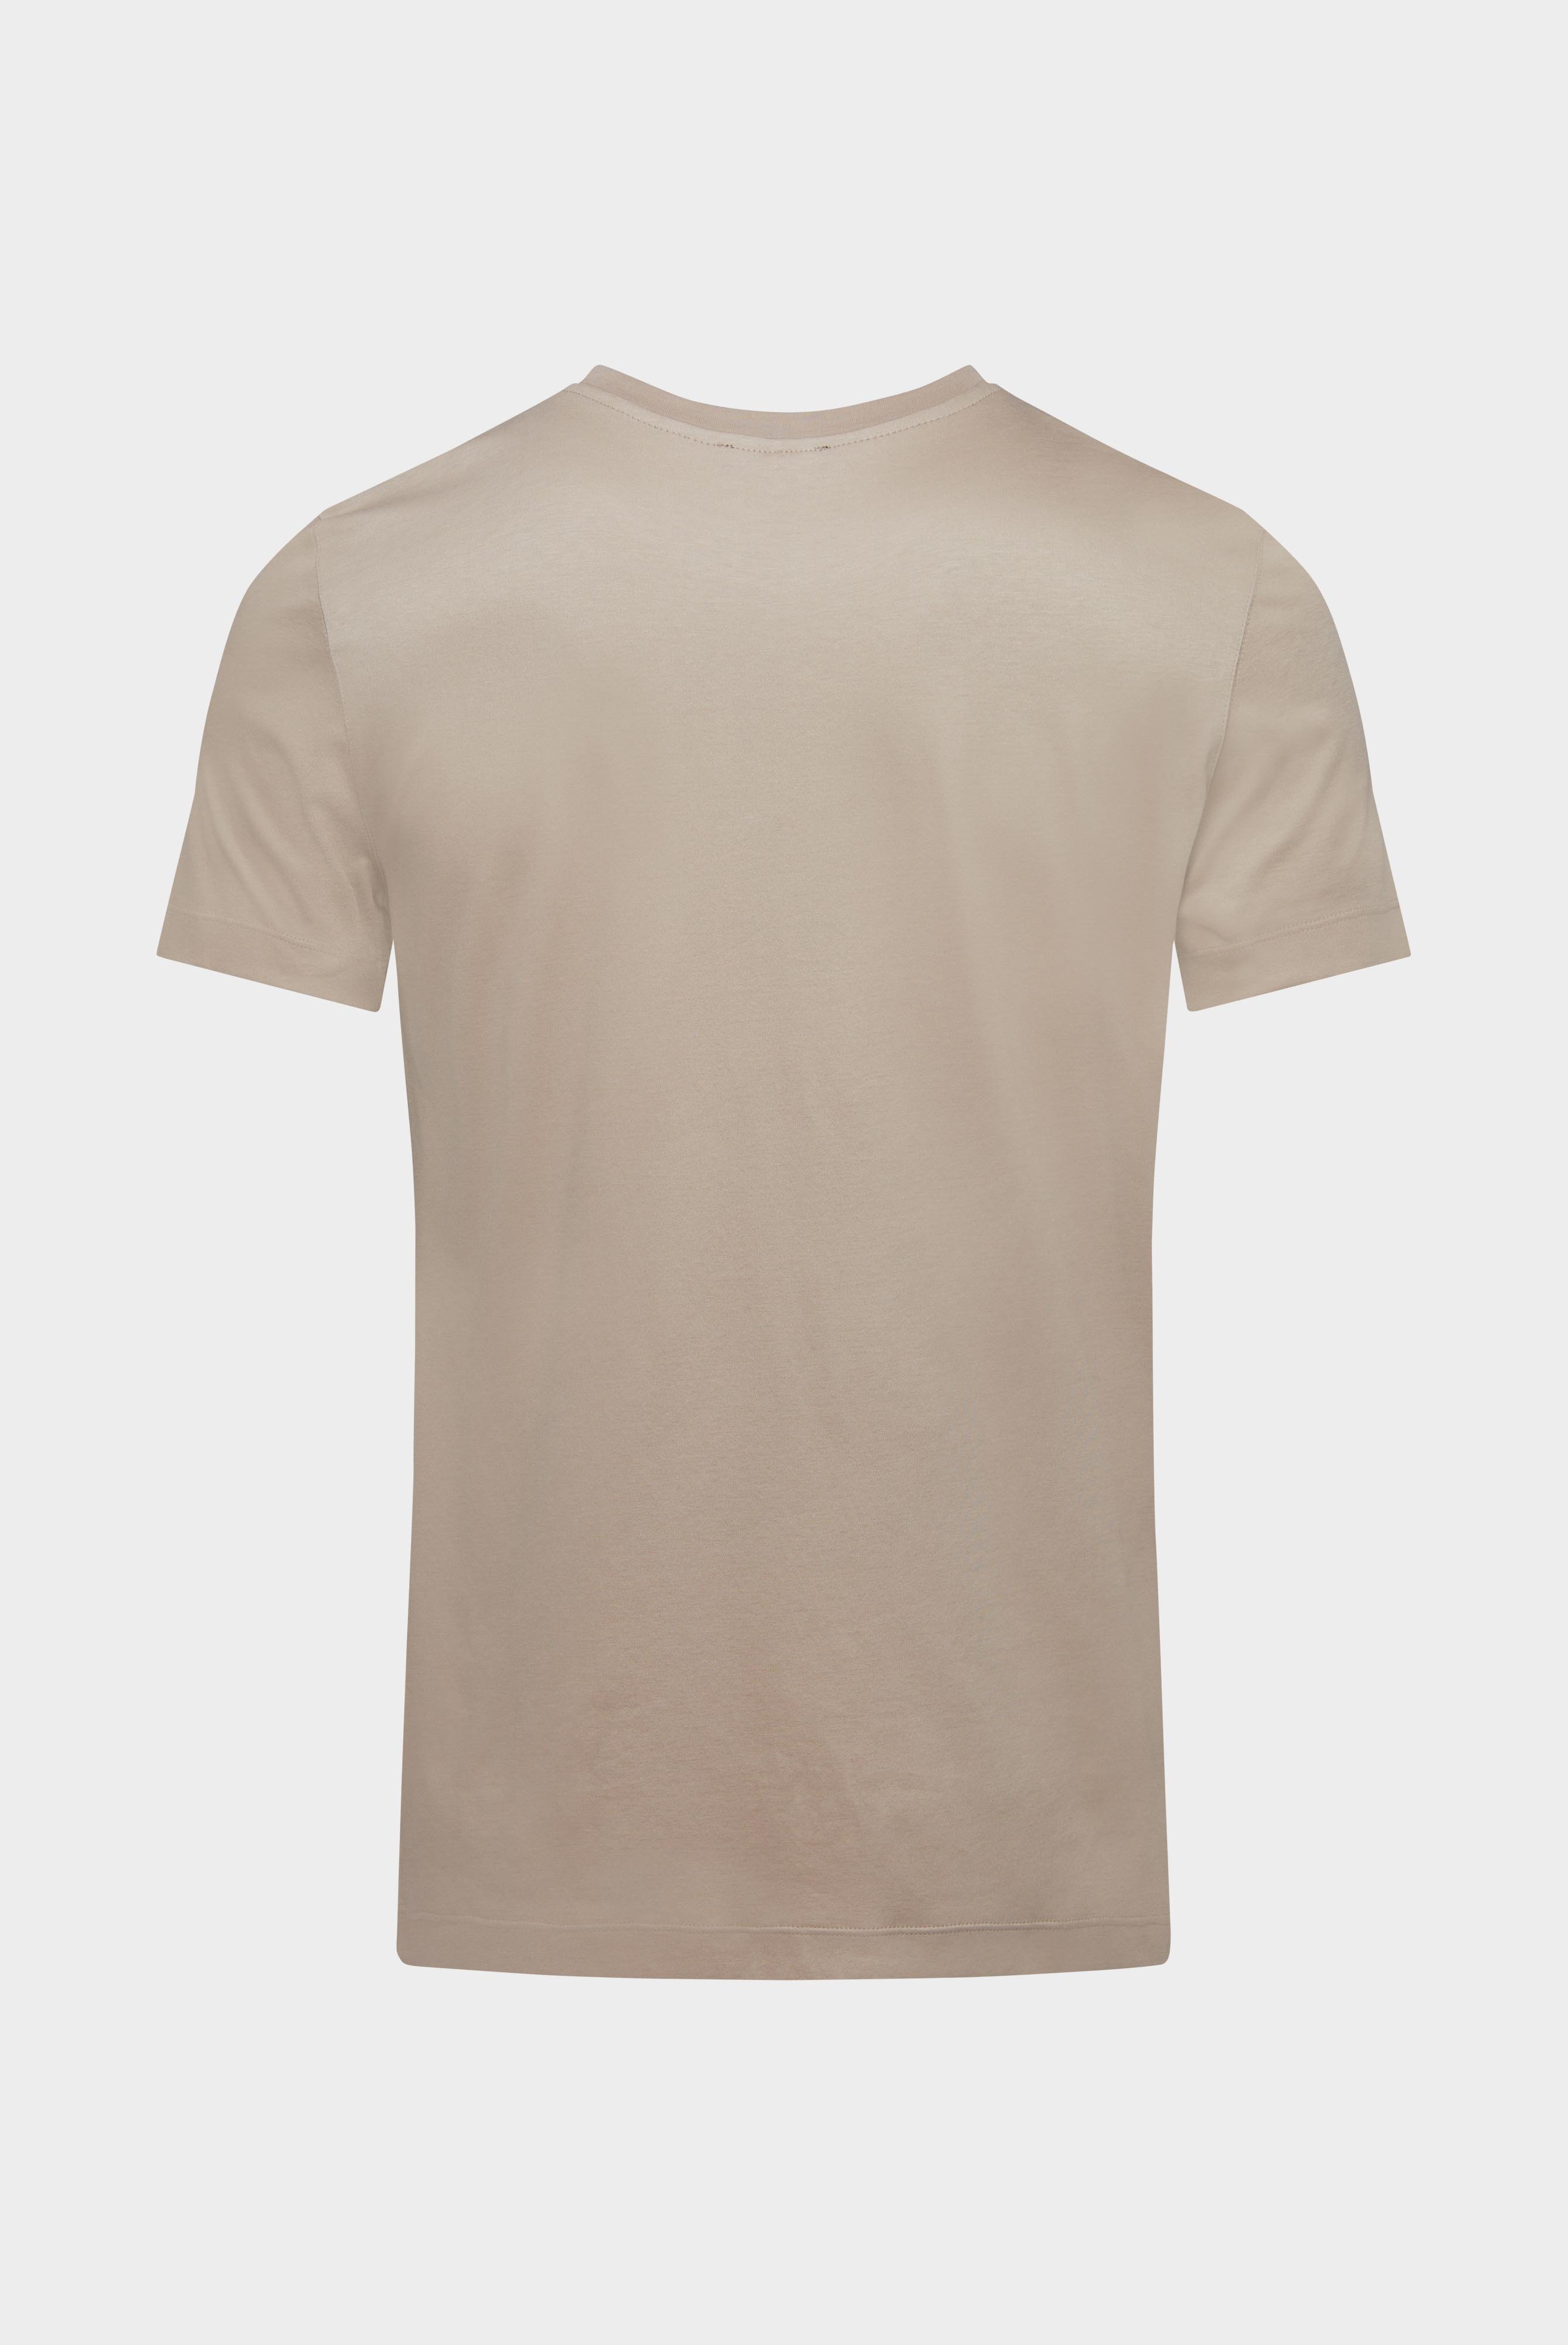 T-Shirts+T-Shirt made of Swiss Cotton+20.1717.UX.180031.140.L